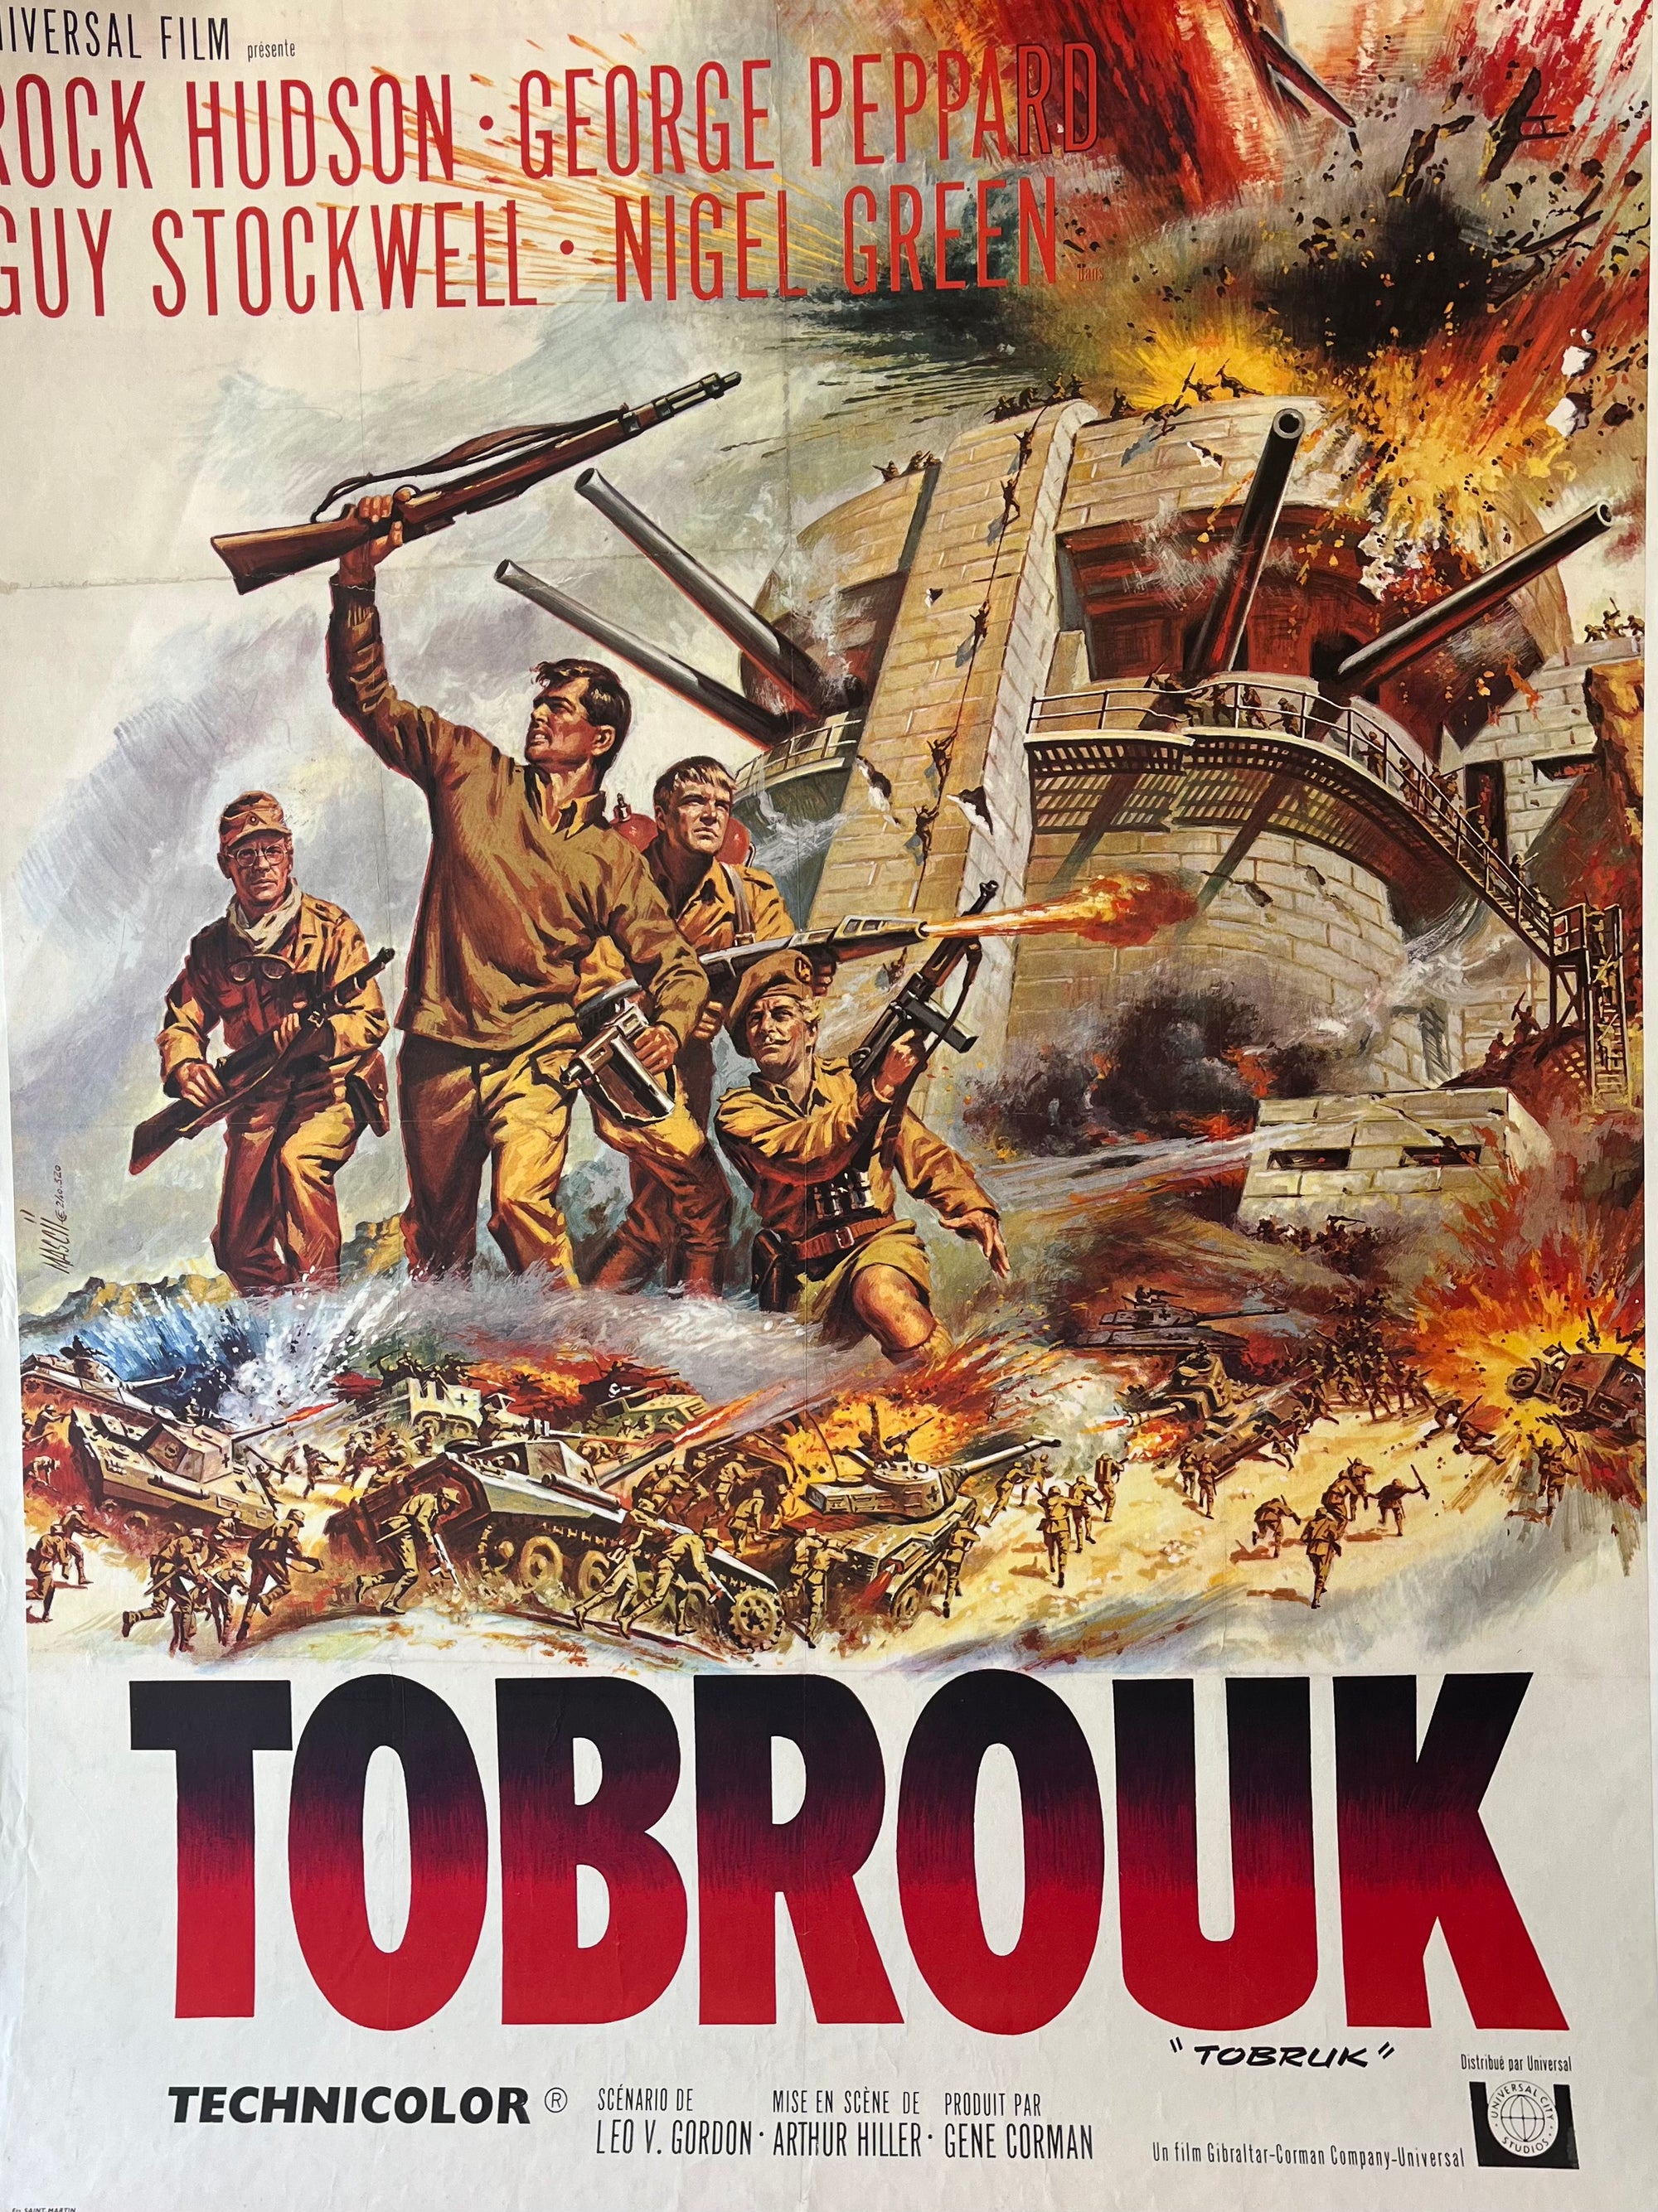 Tobrouk by Universal film